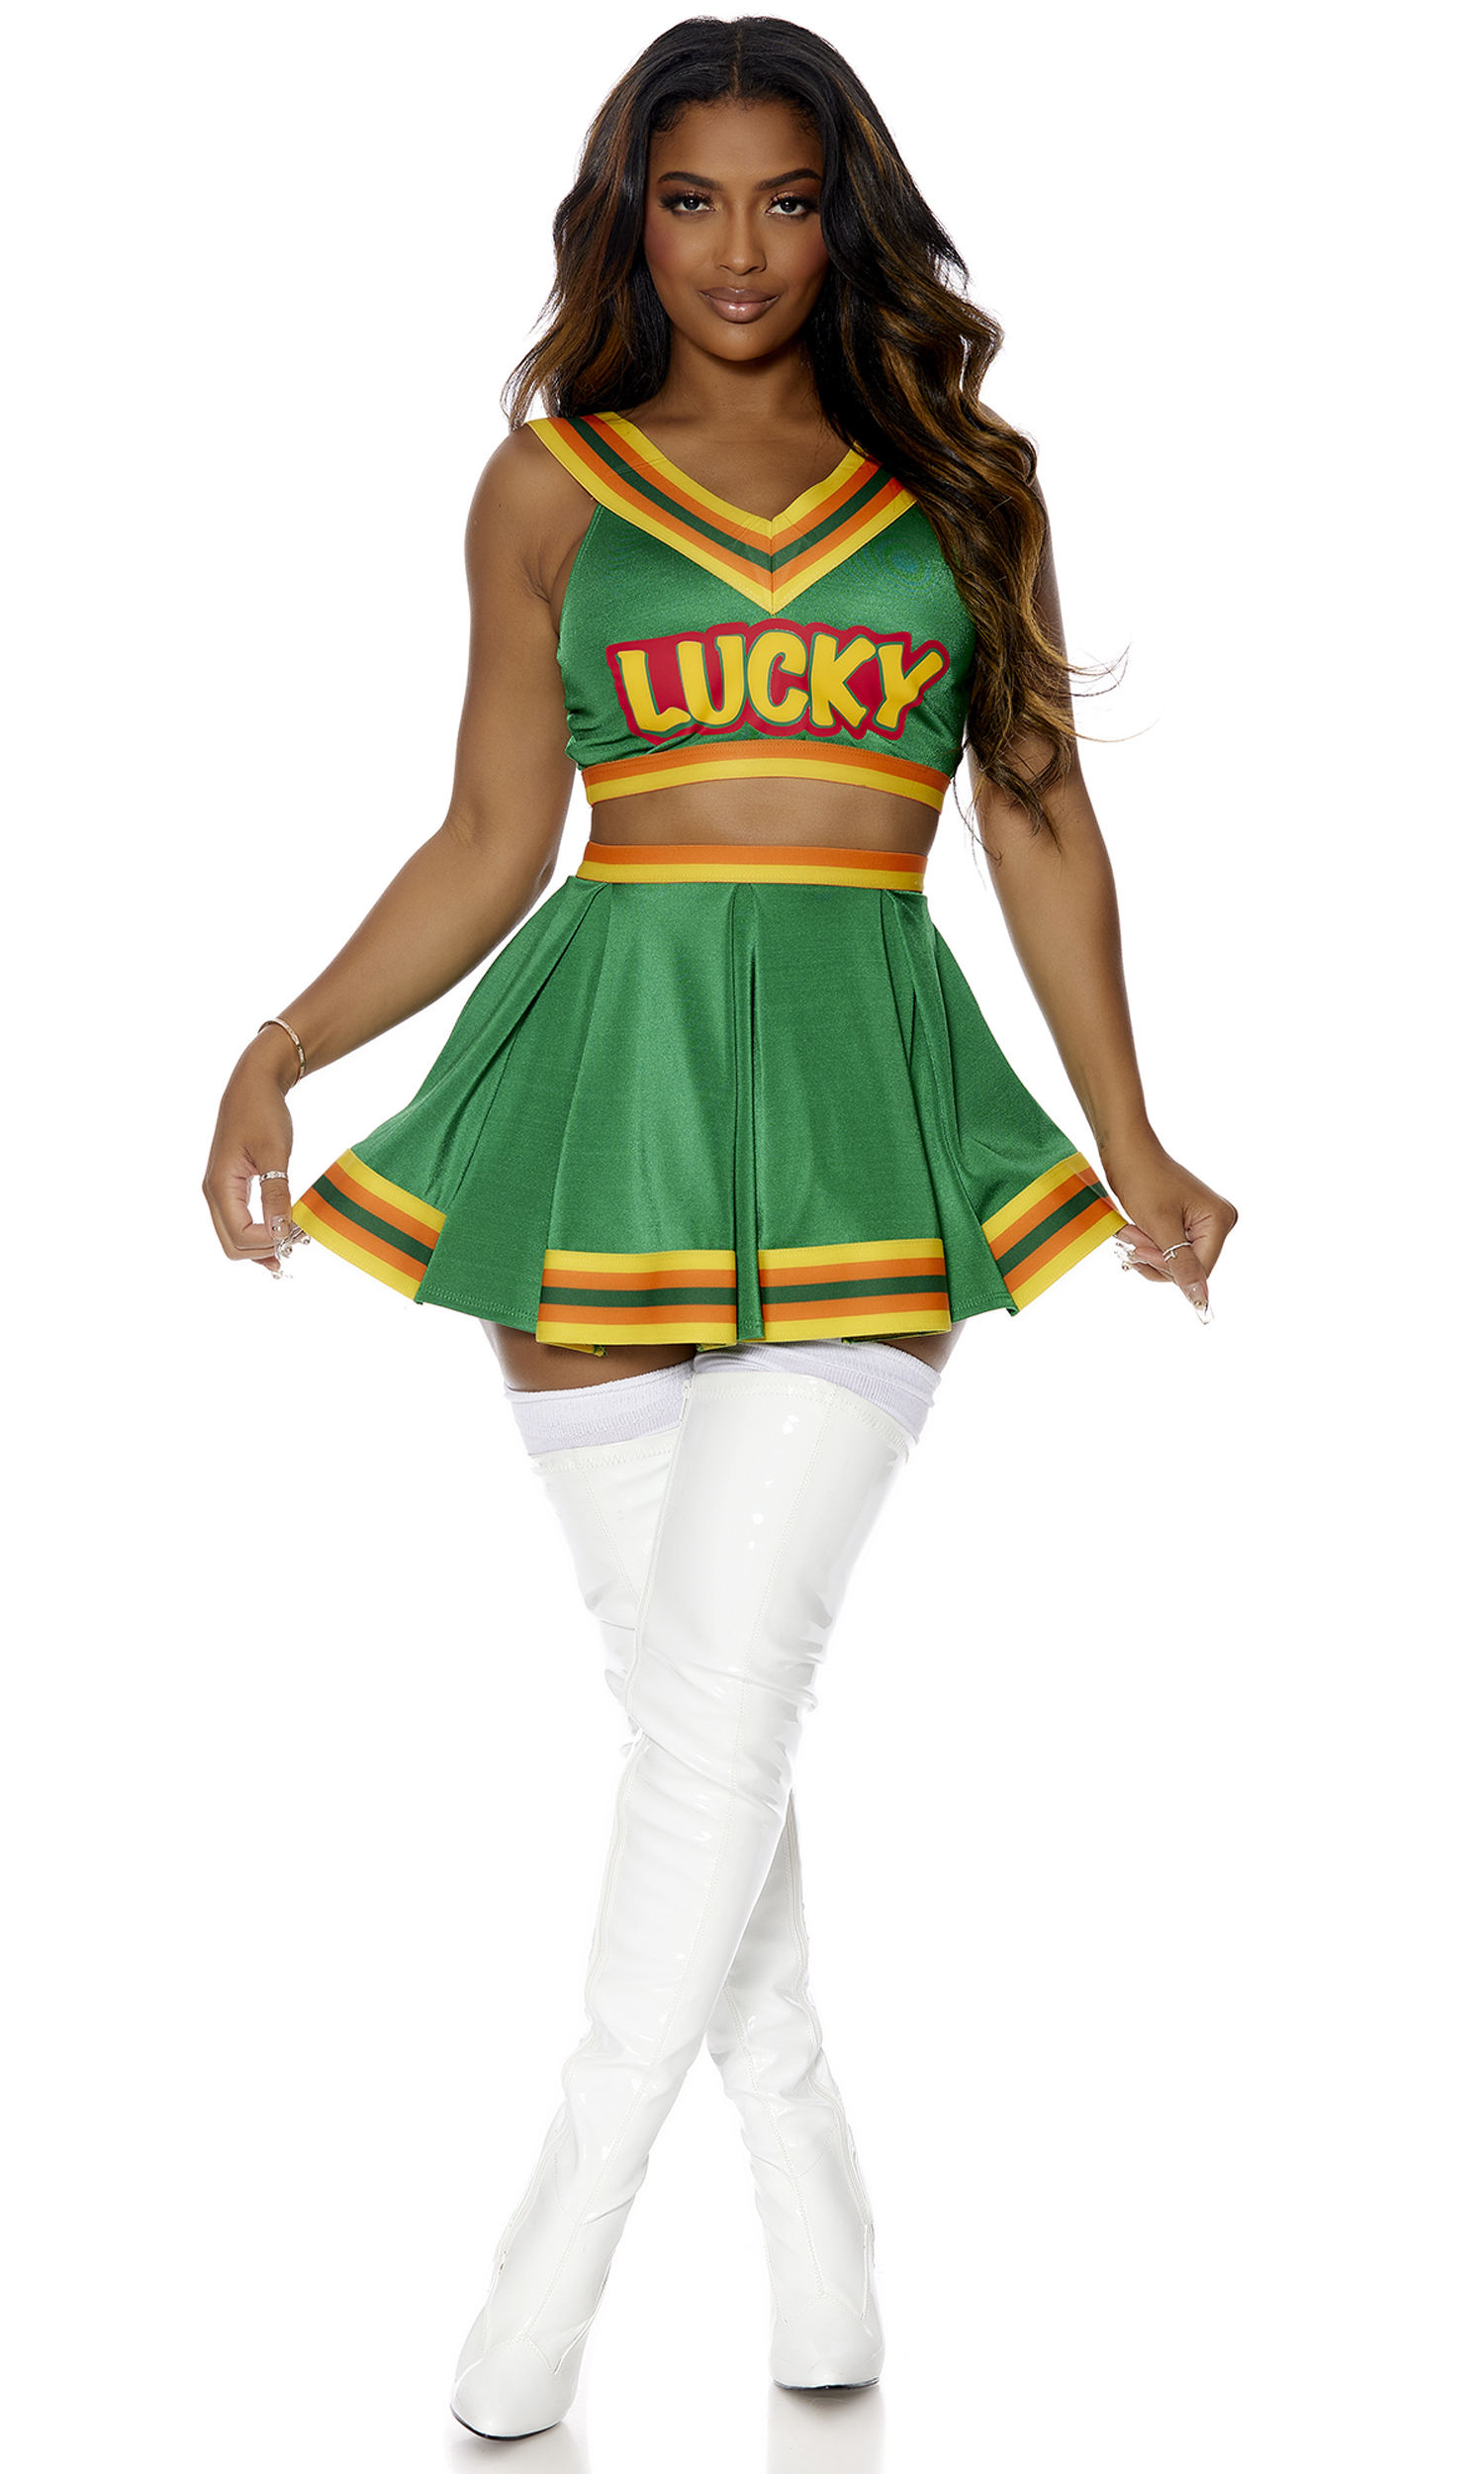 https://www.thecostumeland.com/images/zoom/fr552908-lucky-clover-woman-cheerleader.jpg